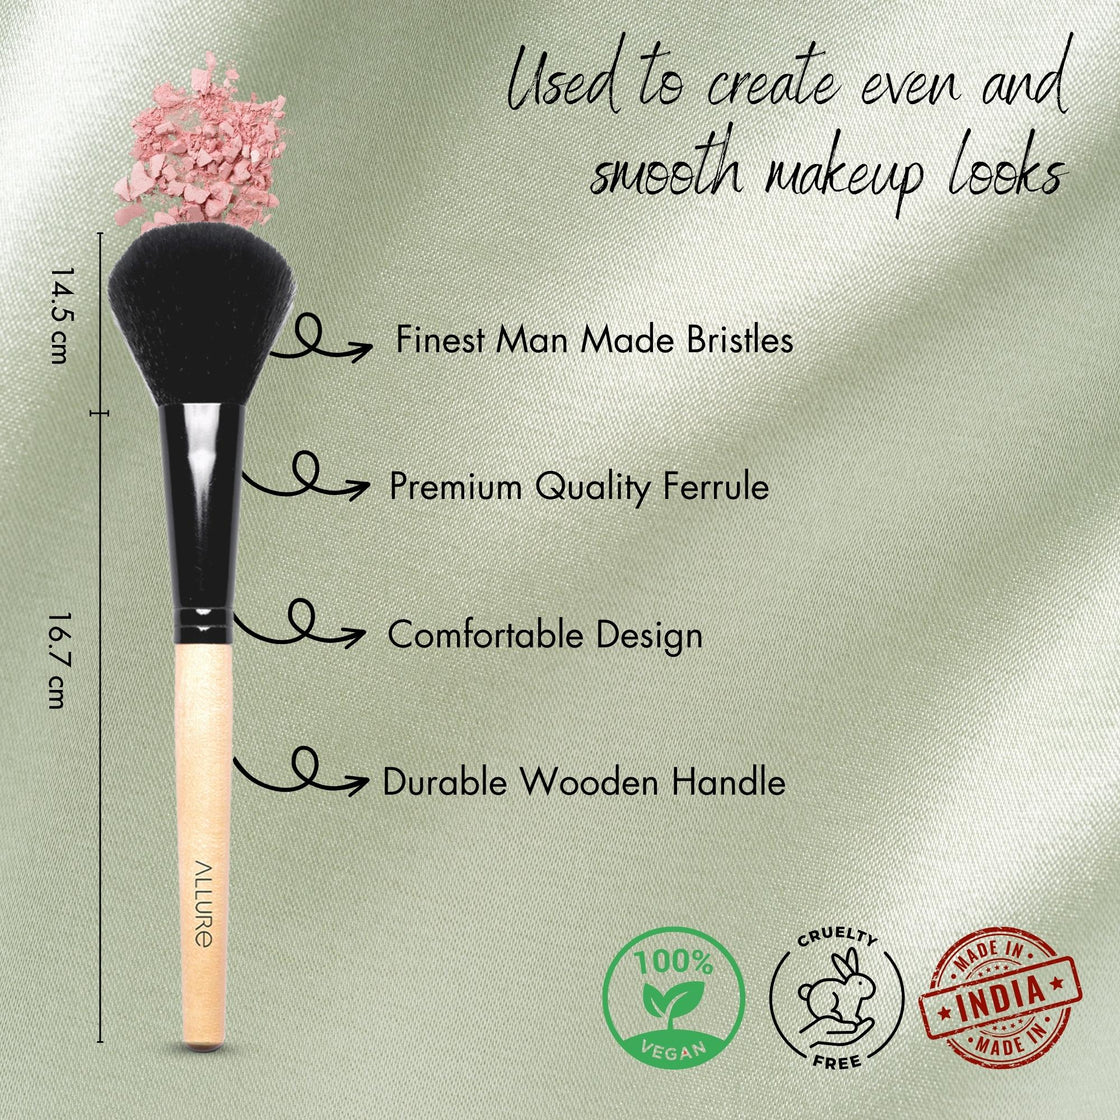 Allure Classic Powder Makeup Brush